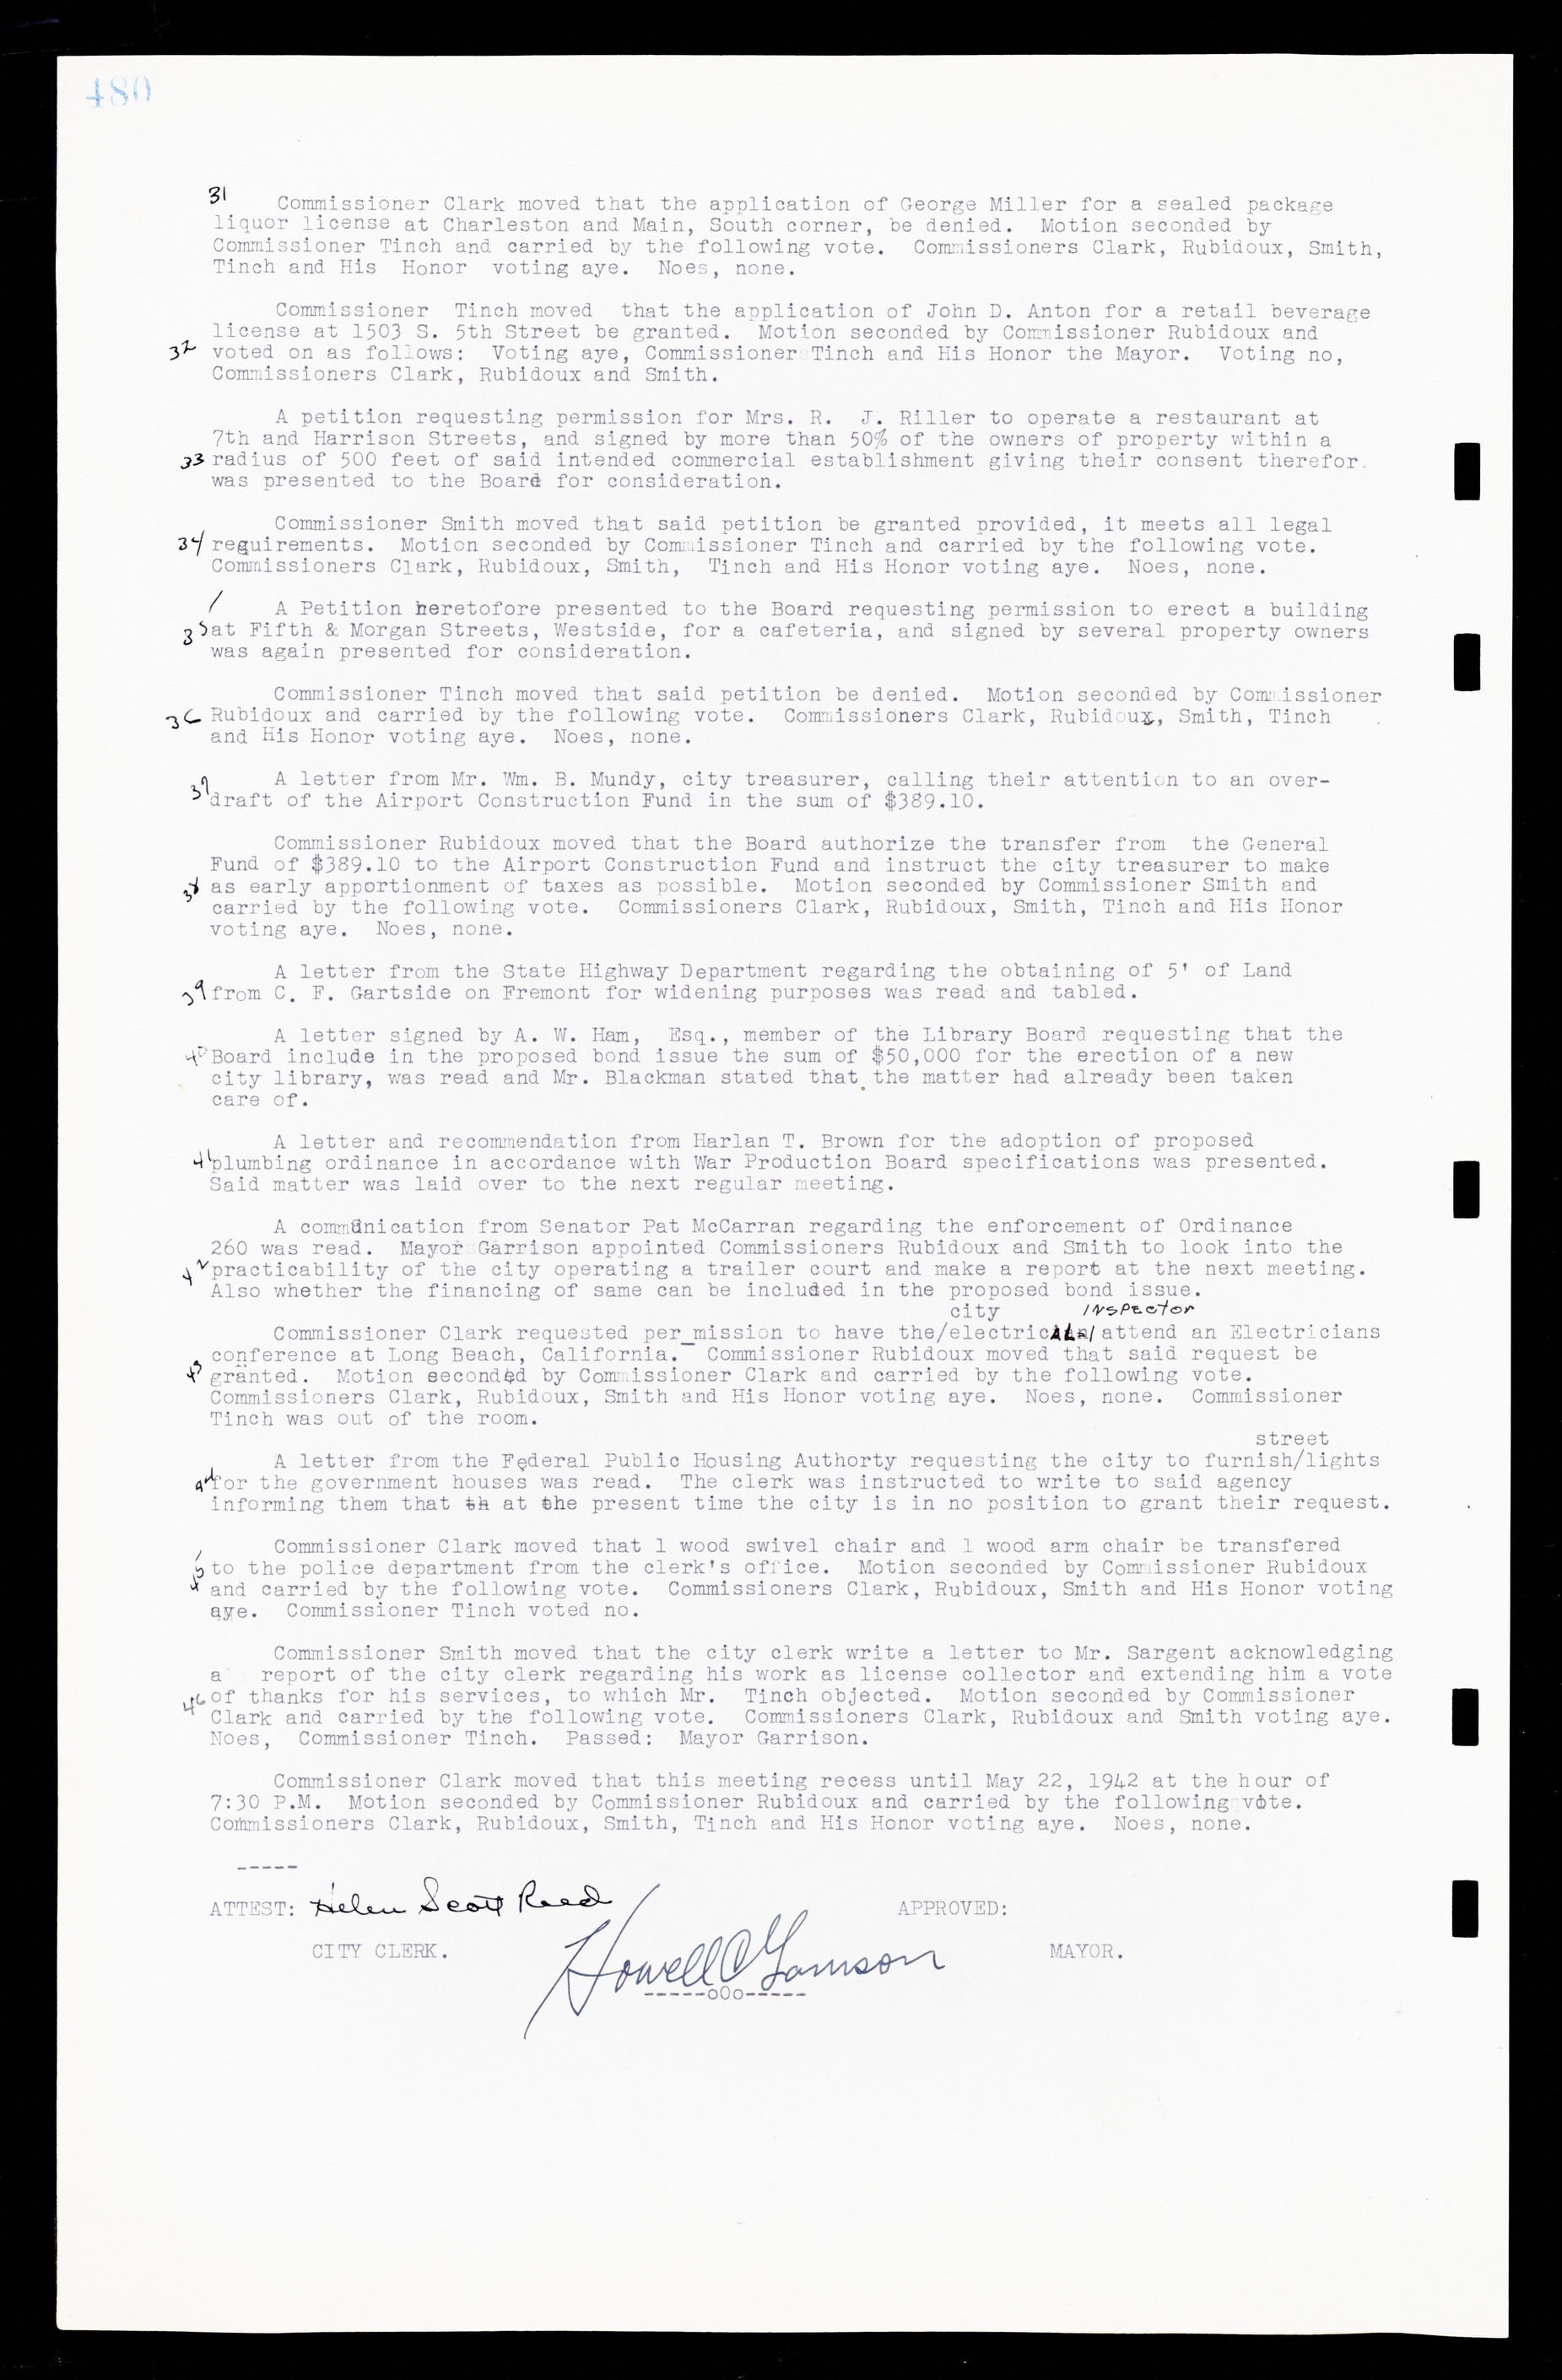 Las Vegas City Commission Minutes, February 17, 1937 to August 4, 1942, lvc000004-508